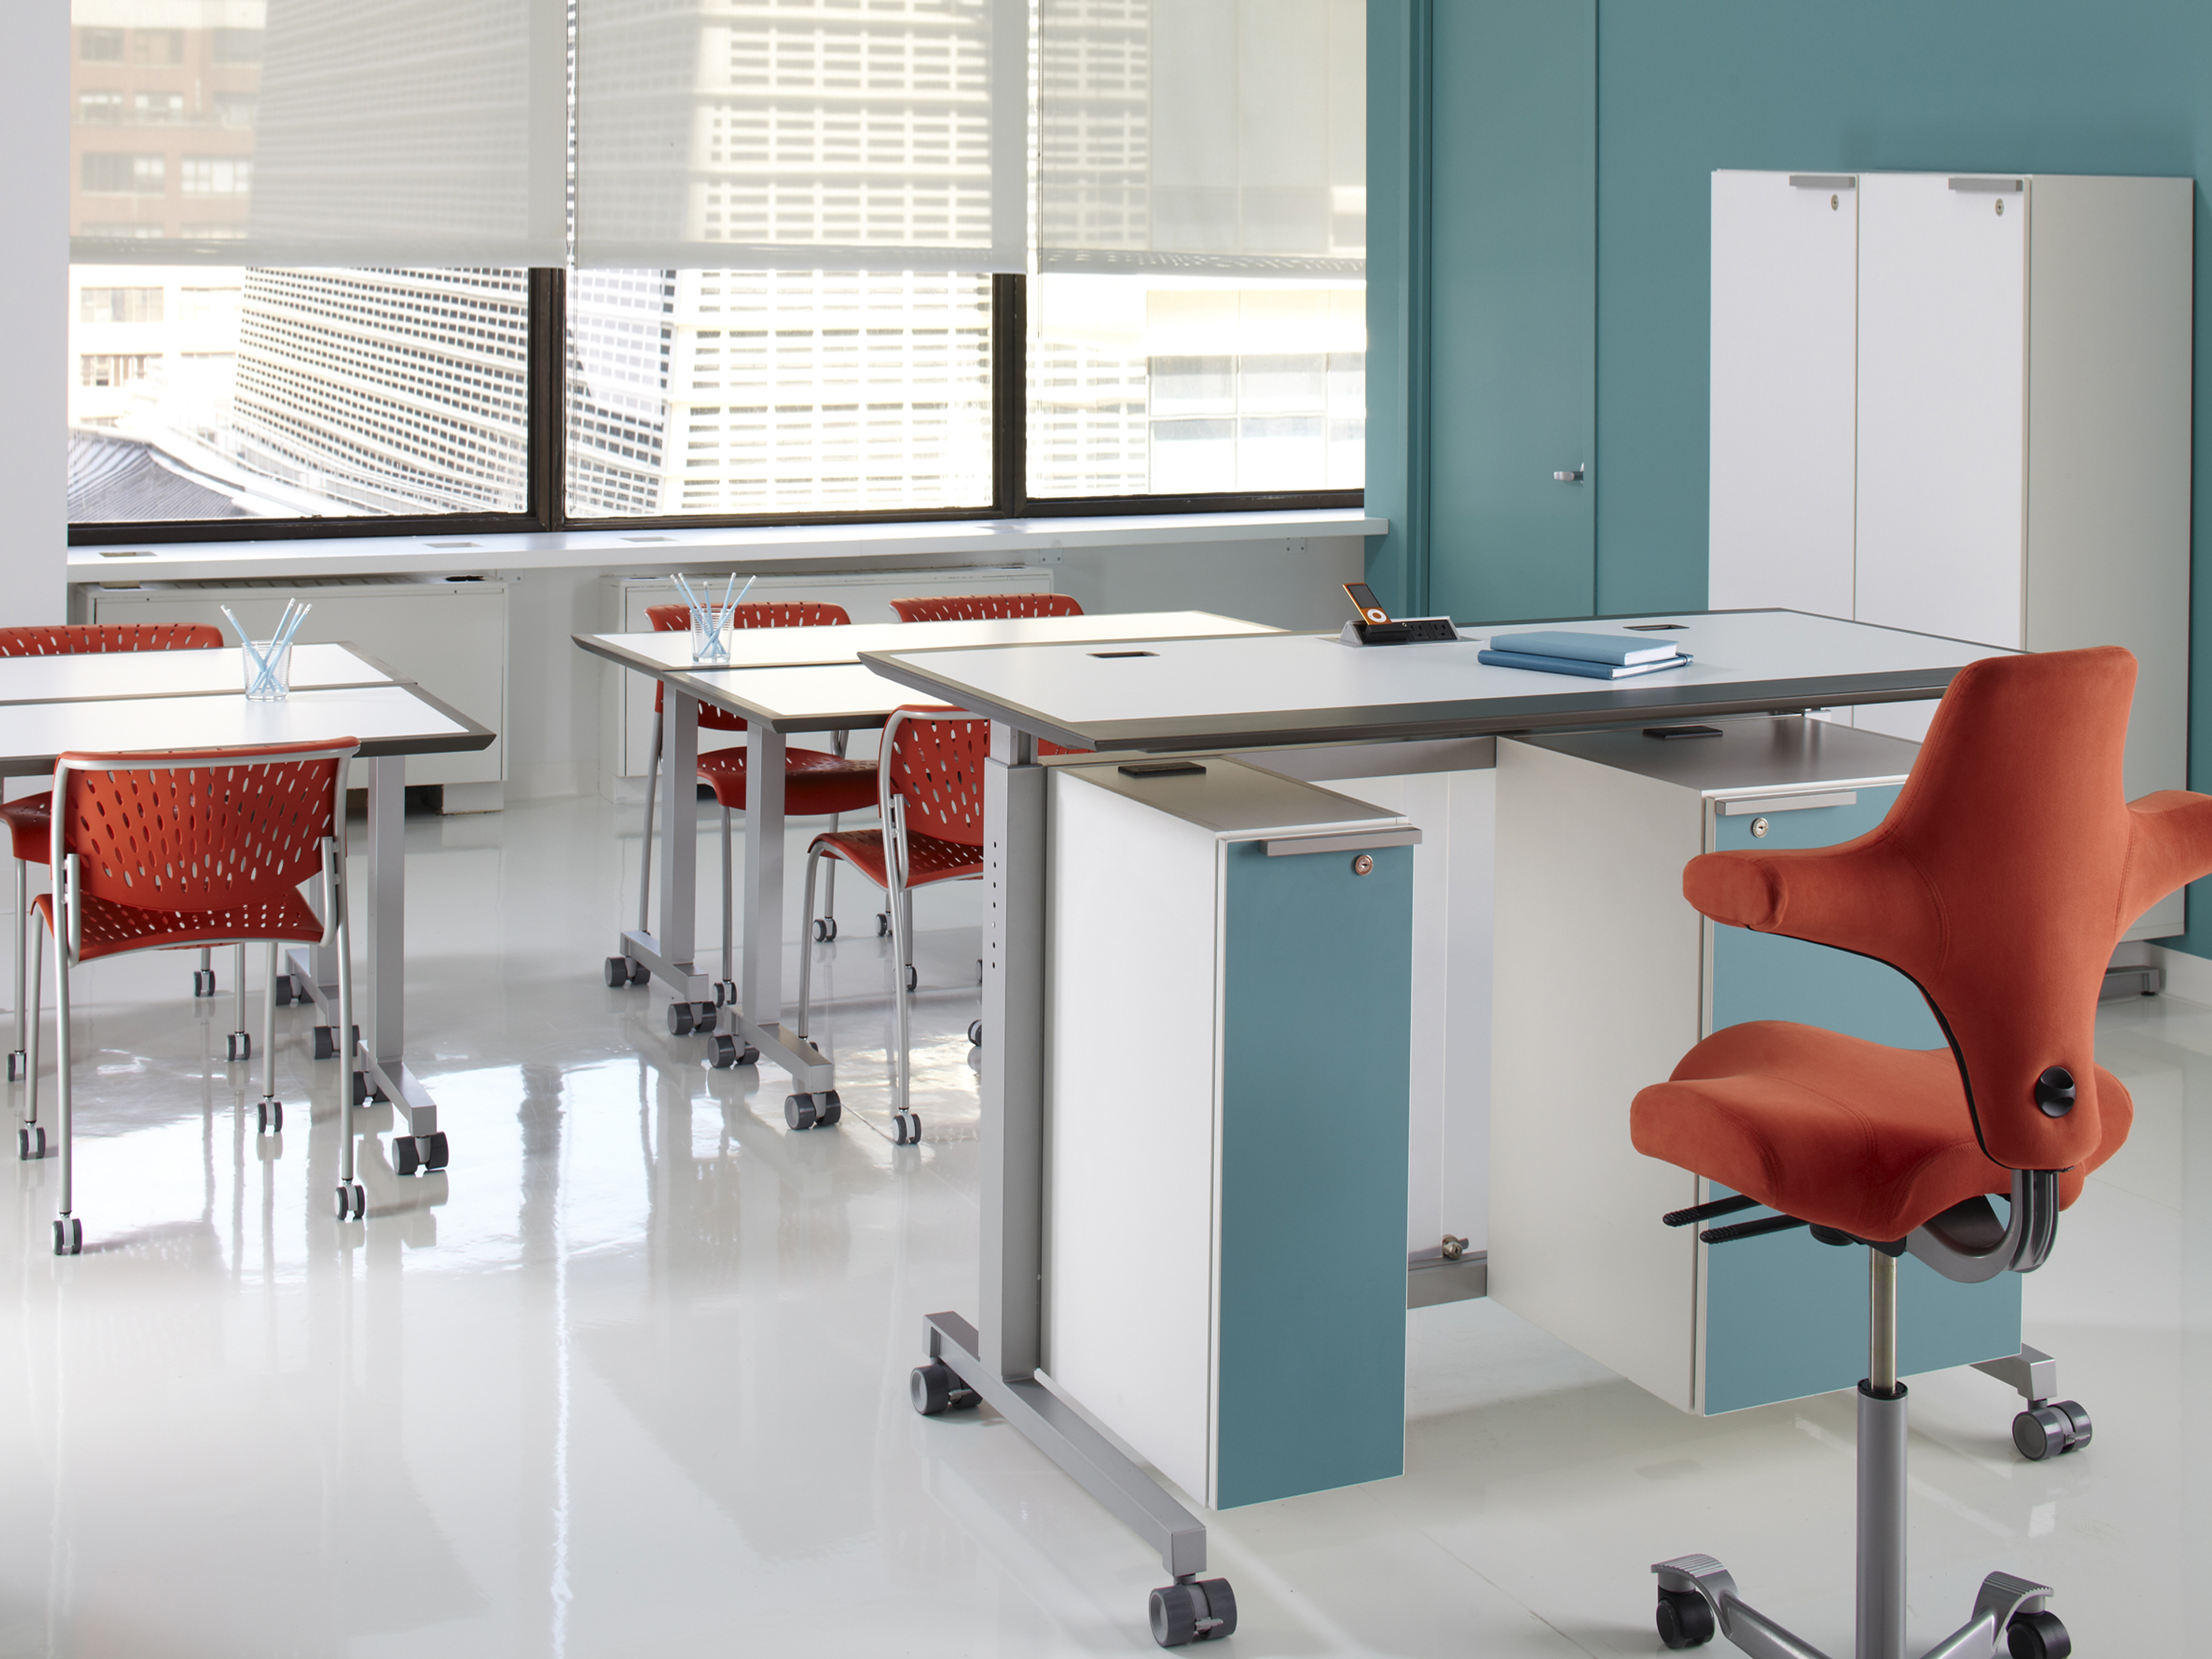 Dewey by SurfaceWorks teacher's desk and several rectangular desks in classroom setting